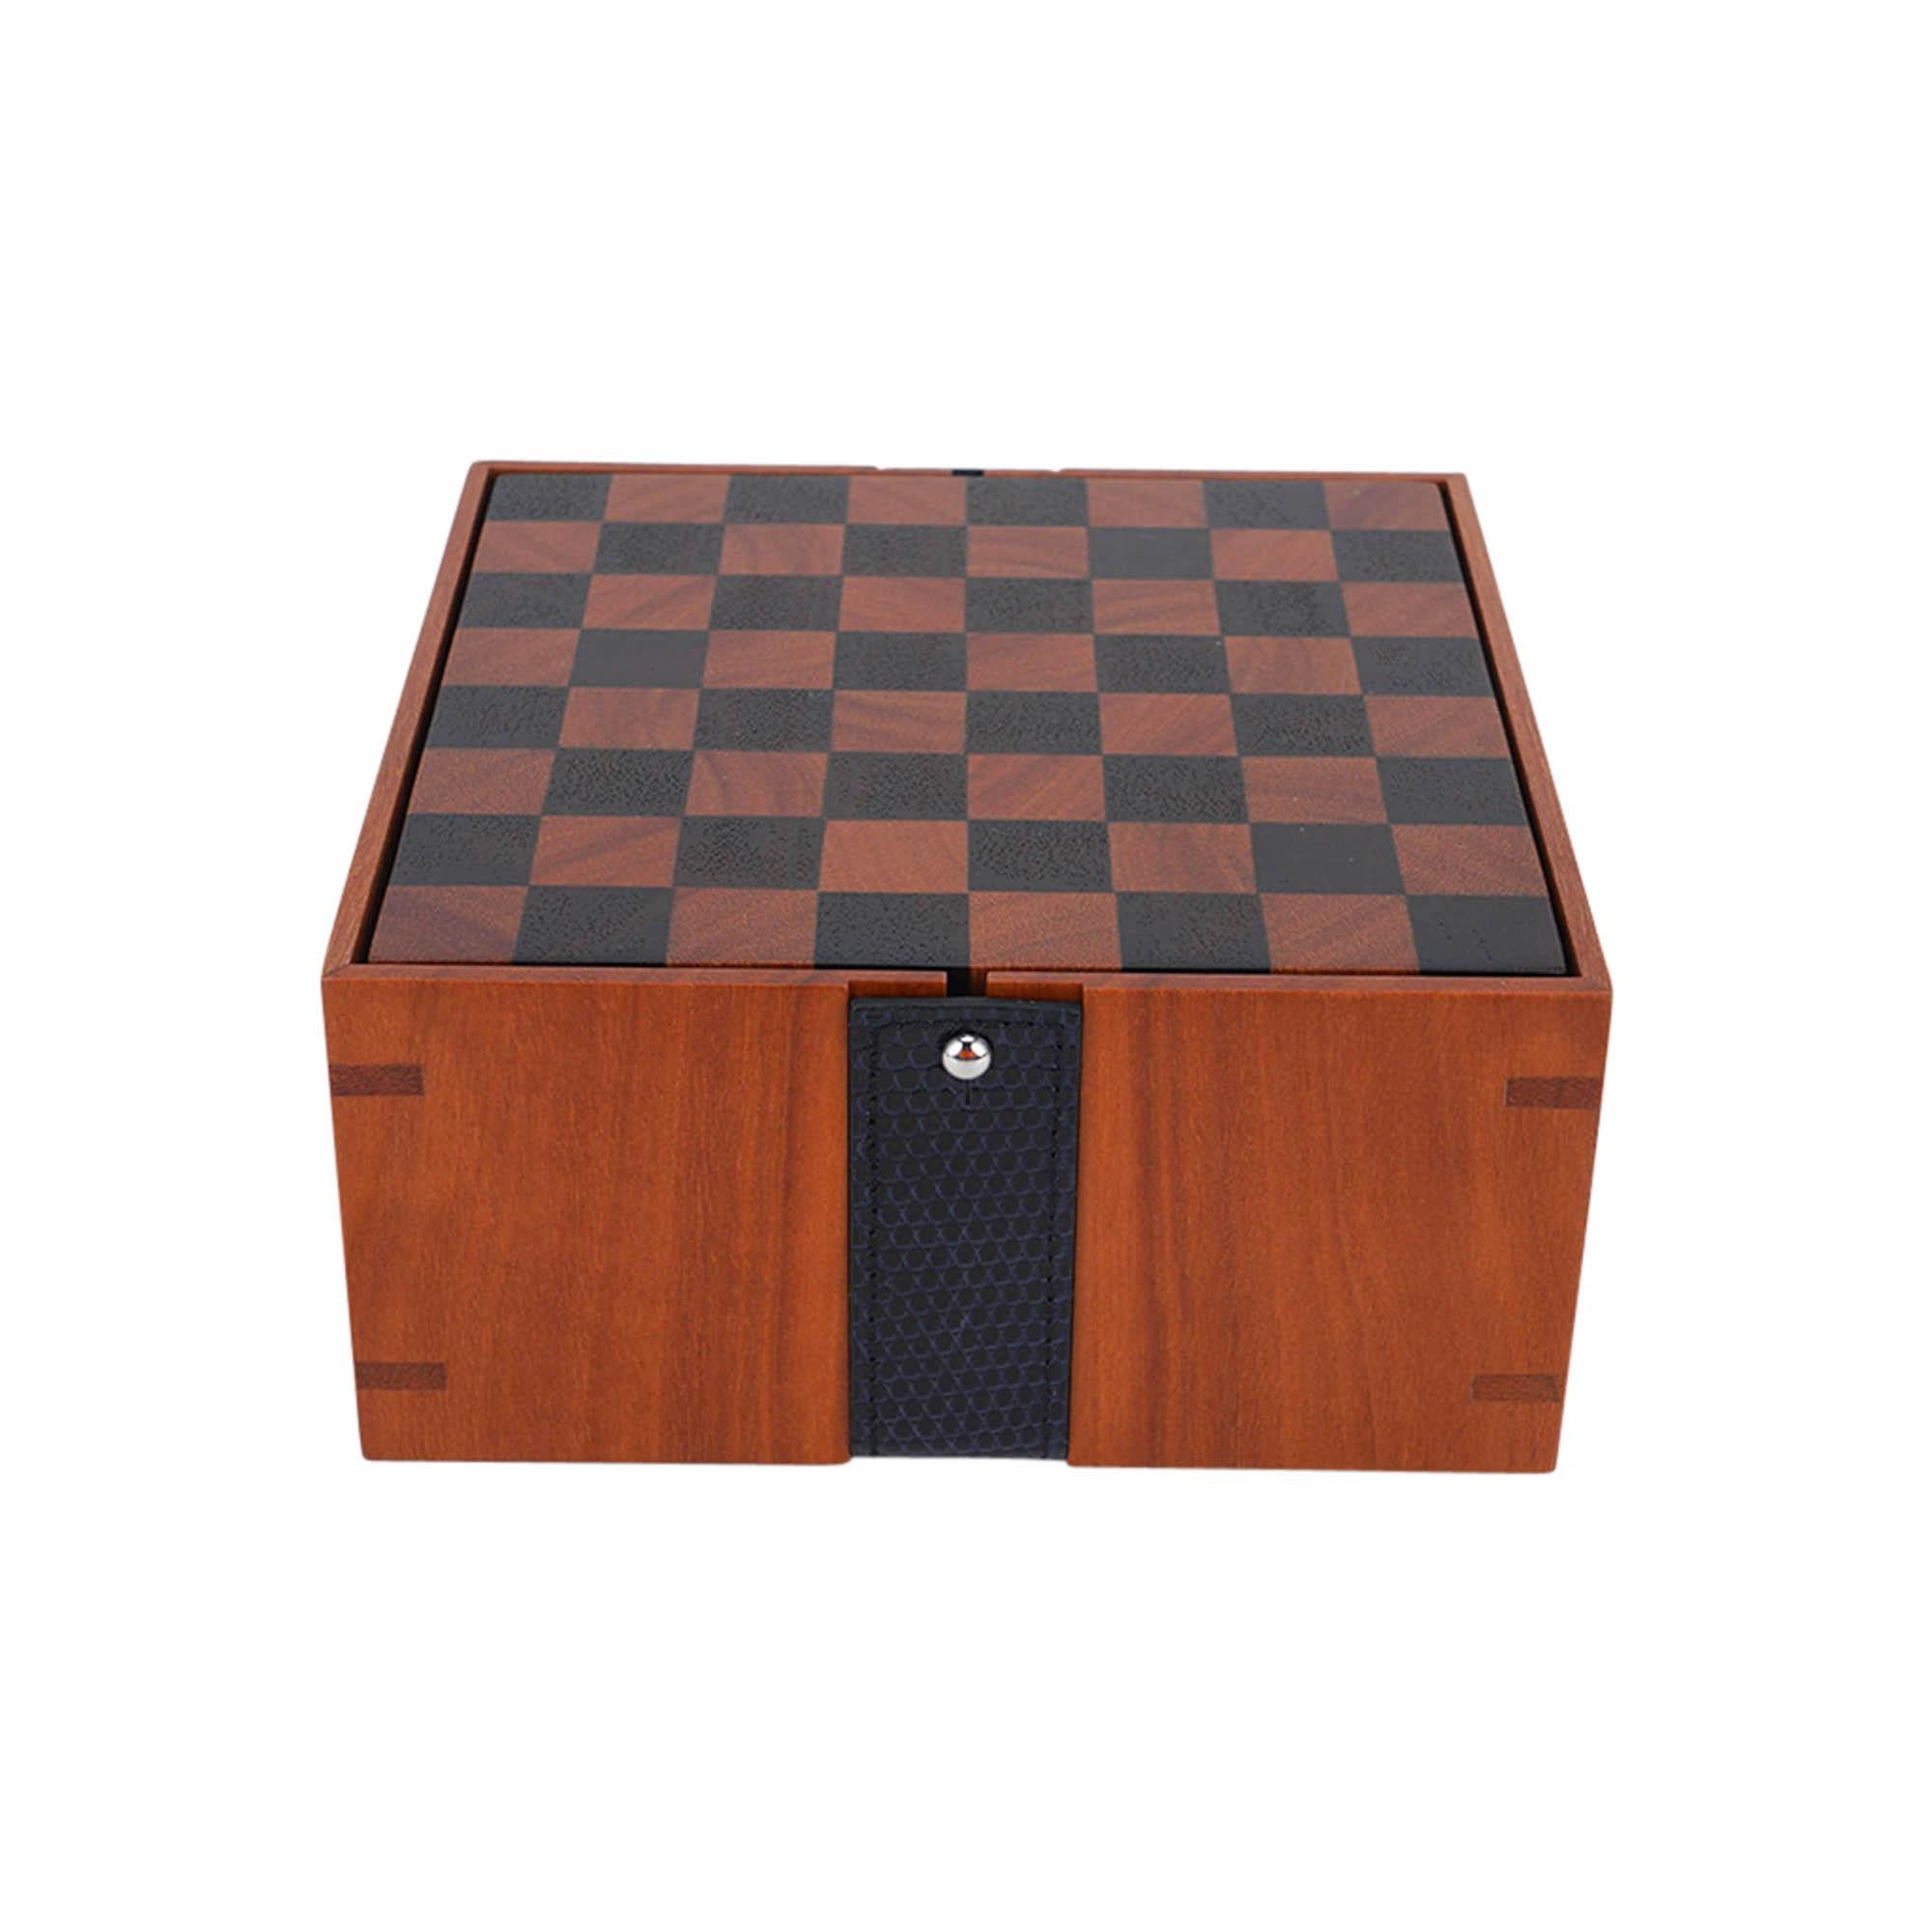 Hermes Mini Samarcande Chess Set Let's Play! Blue Indigo Lizard For Sale 7